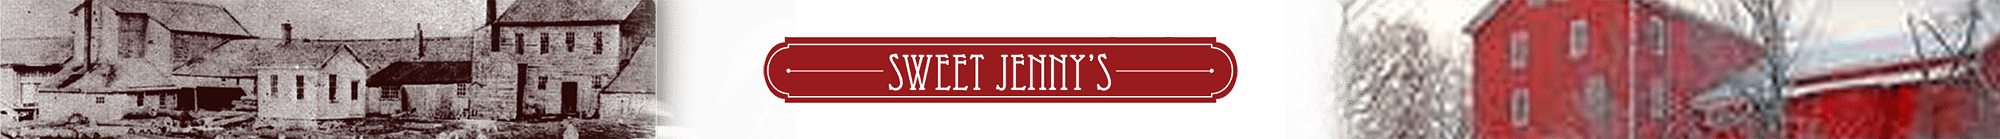 Sweet Jenny's Ice Cream Logo